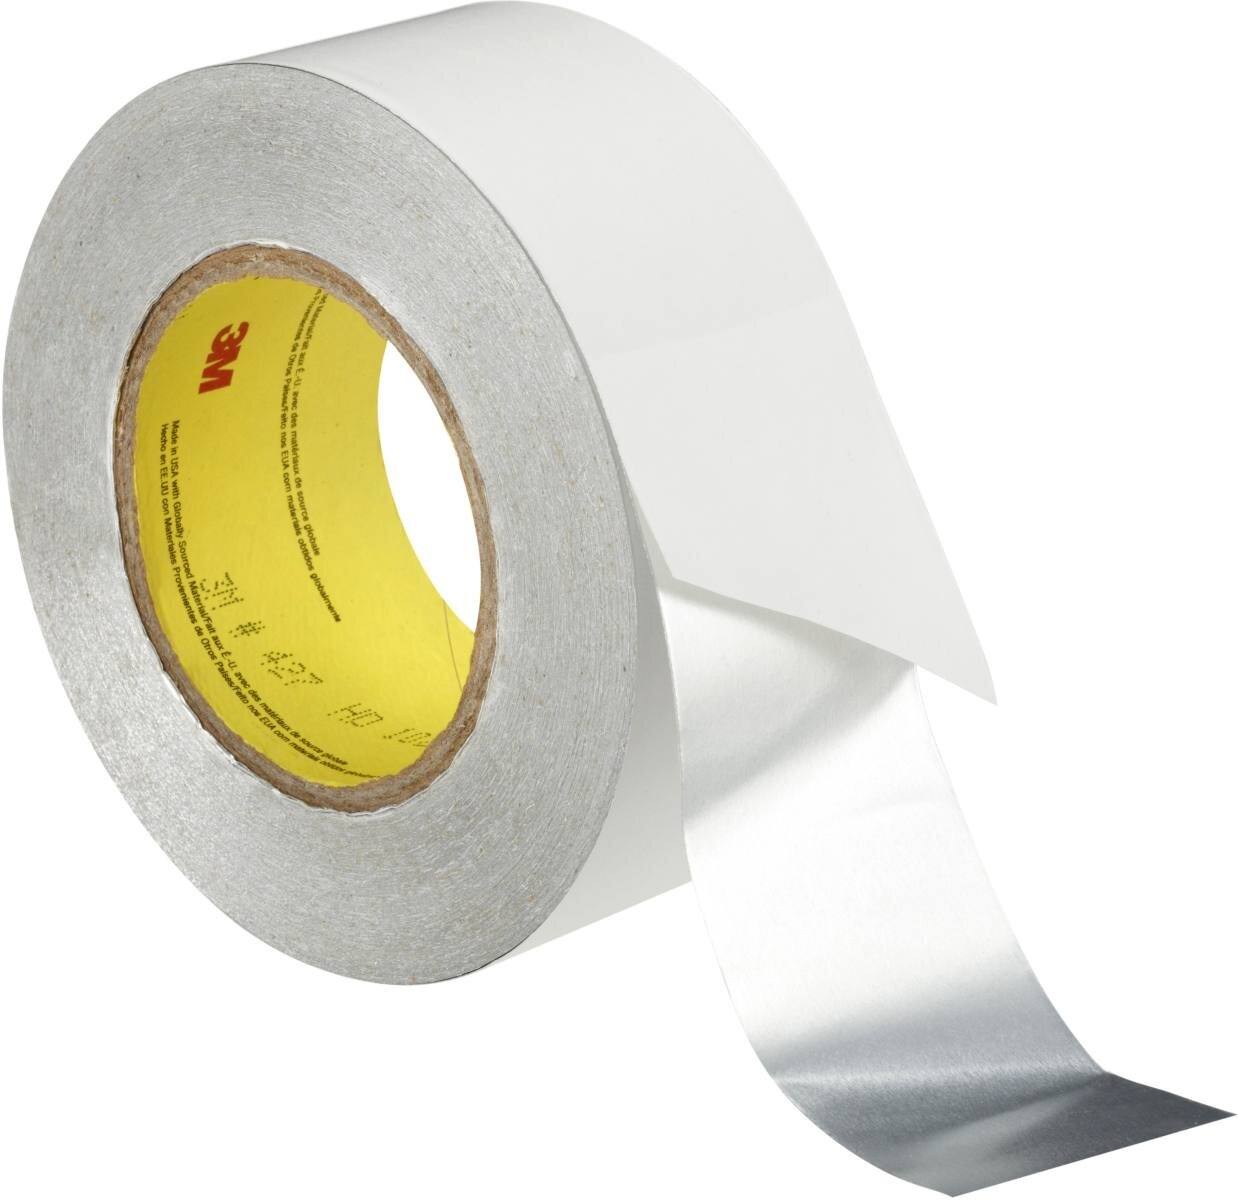 3M metal adhesive tape 427, silver, 38 mm x 55 m, 0.12 mm